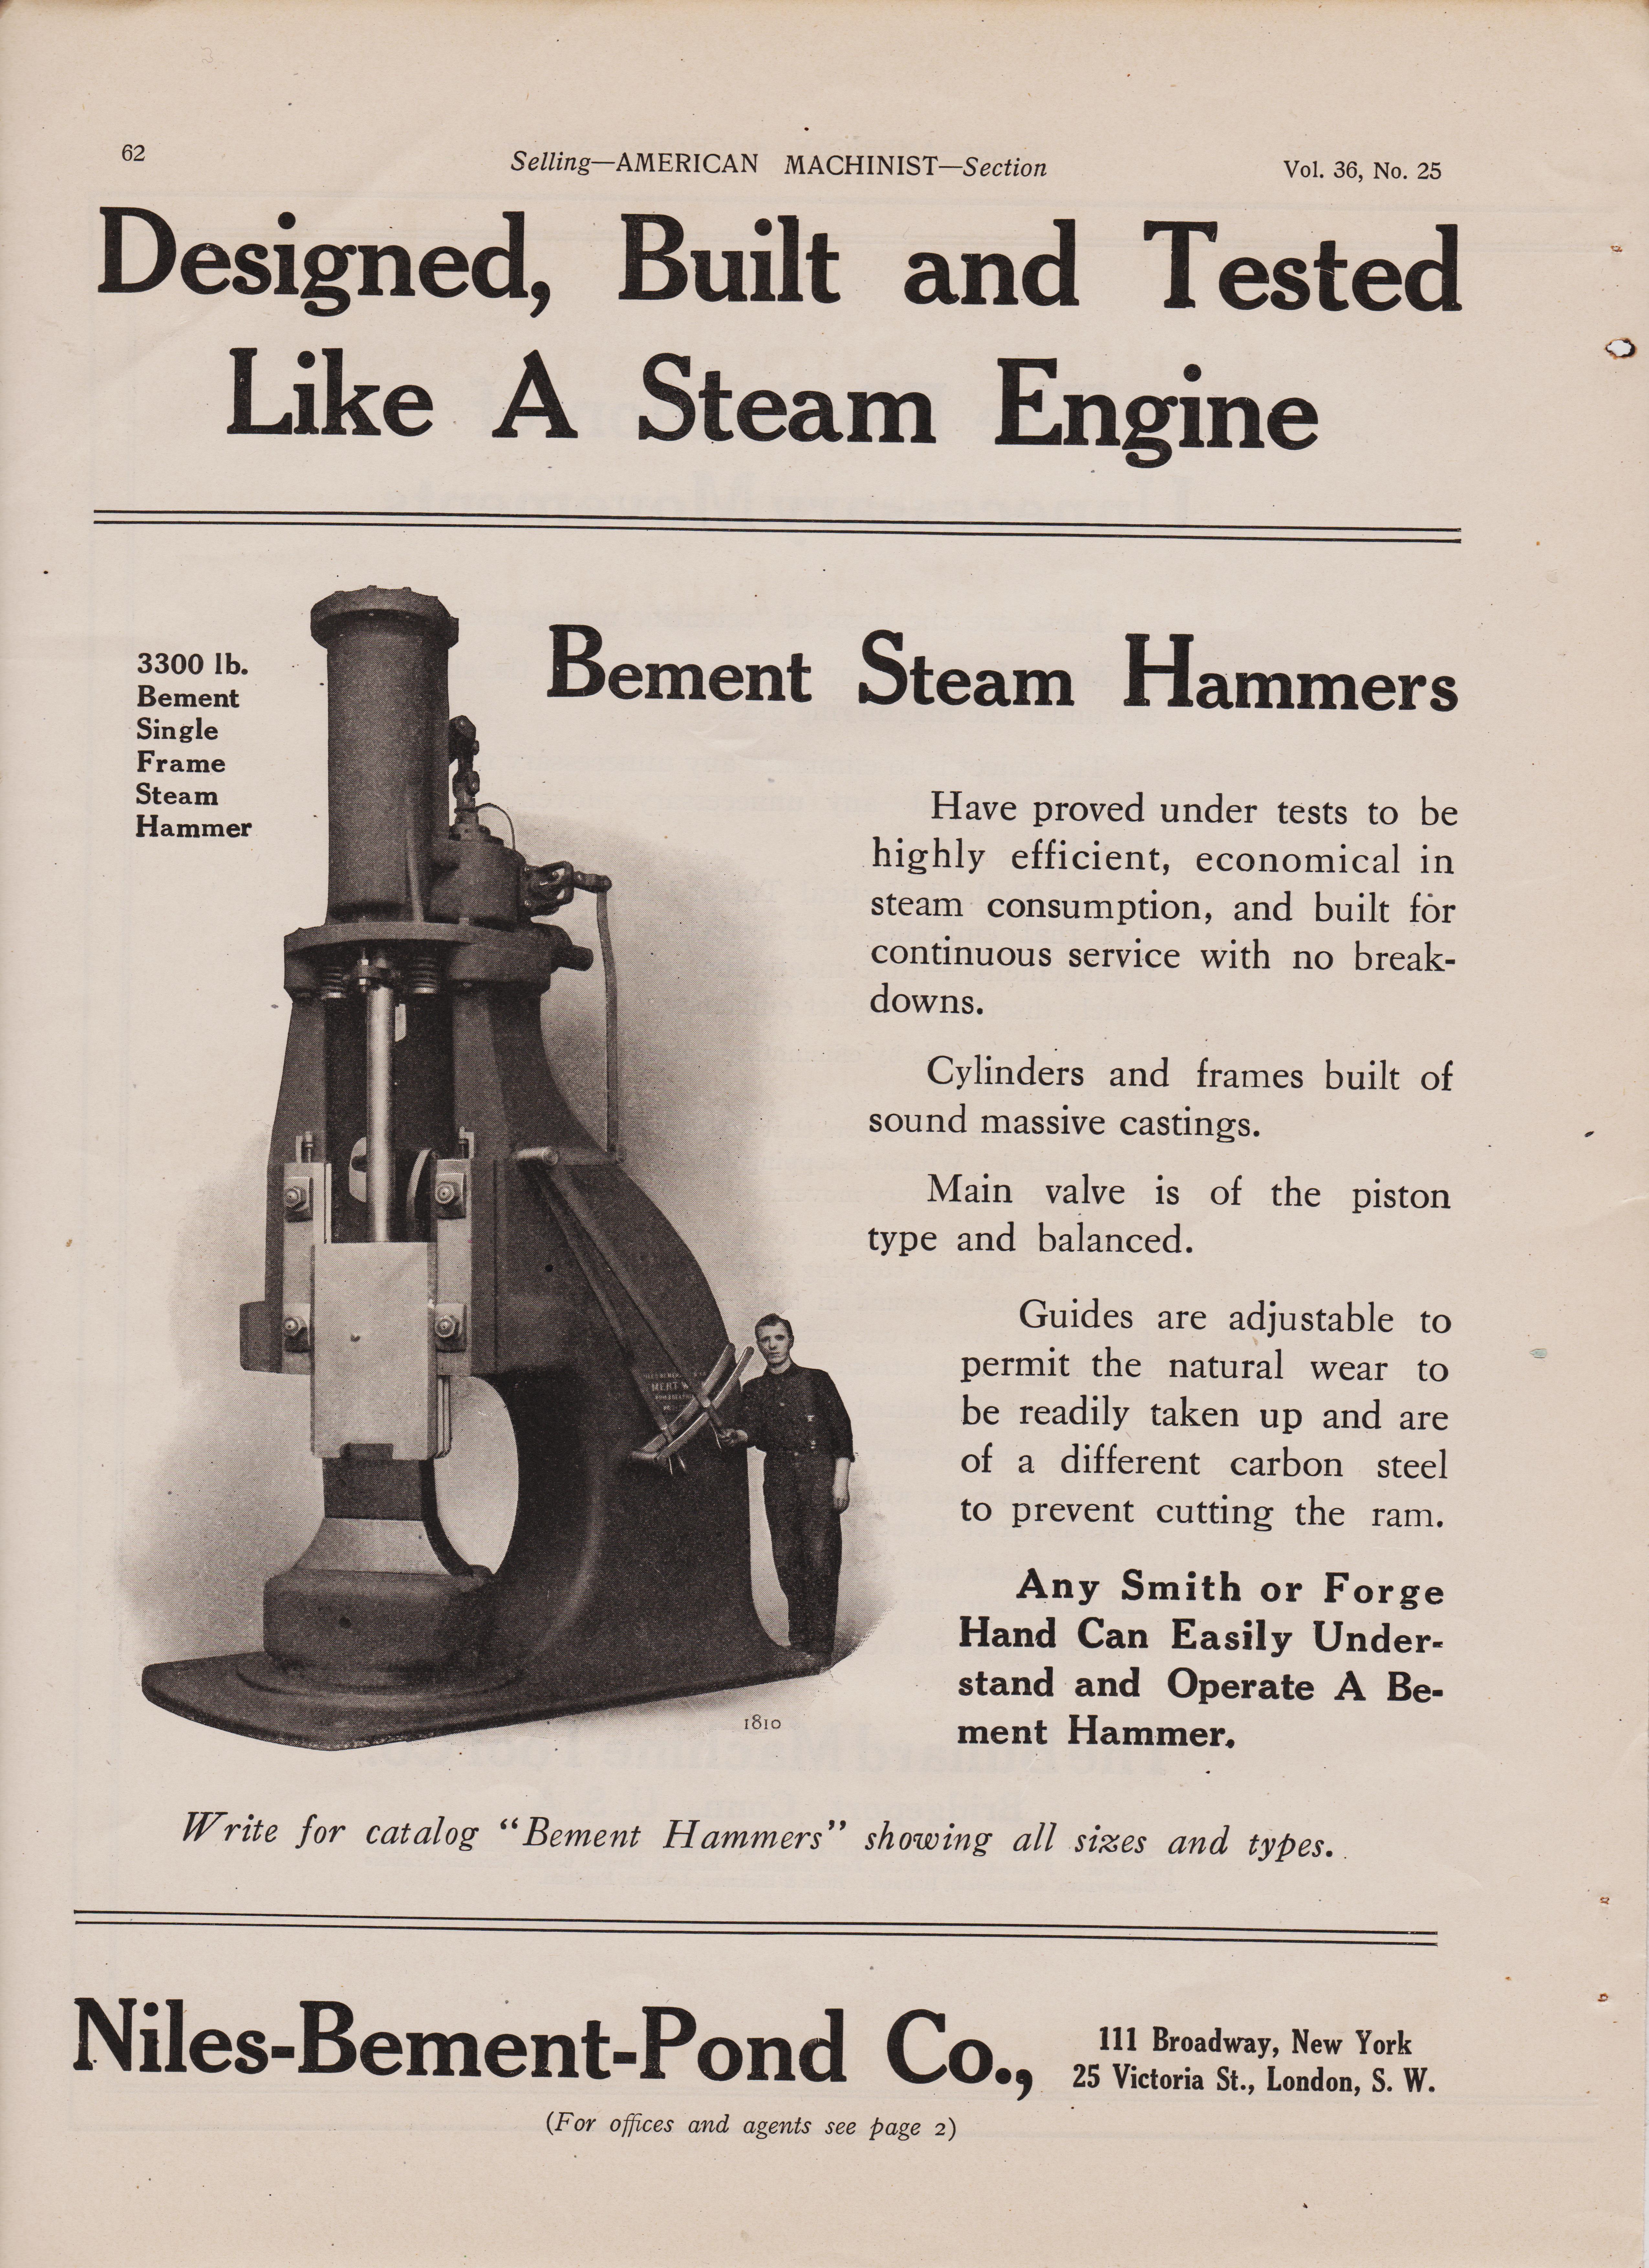 https://antiquemachinery.com/images-2021/American-Machinist-Magazine-June-1912-pg-62-3300-lb-Niles-Bemen-Pond-t-Steam-Hammer.jpeg.jpeg